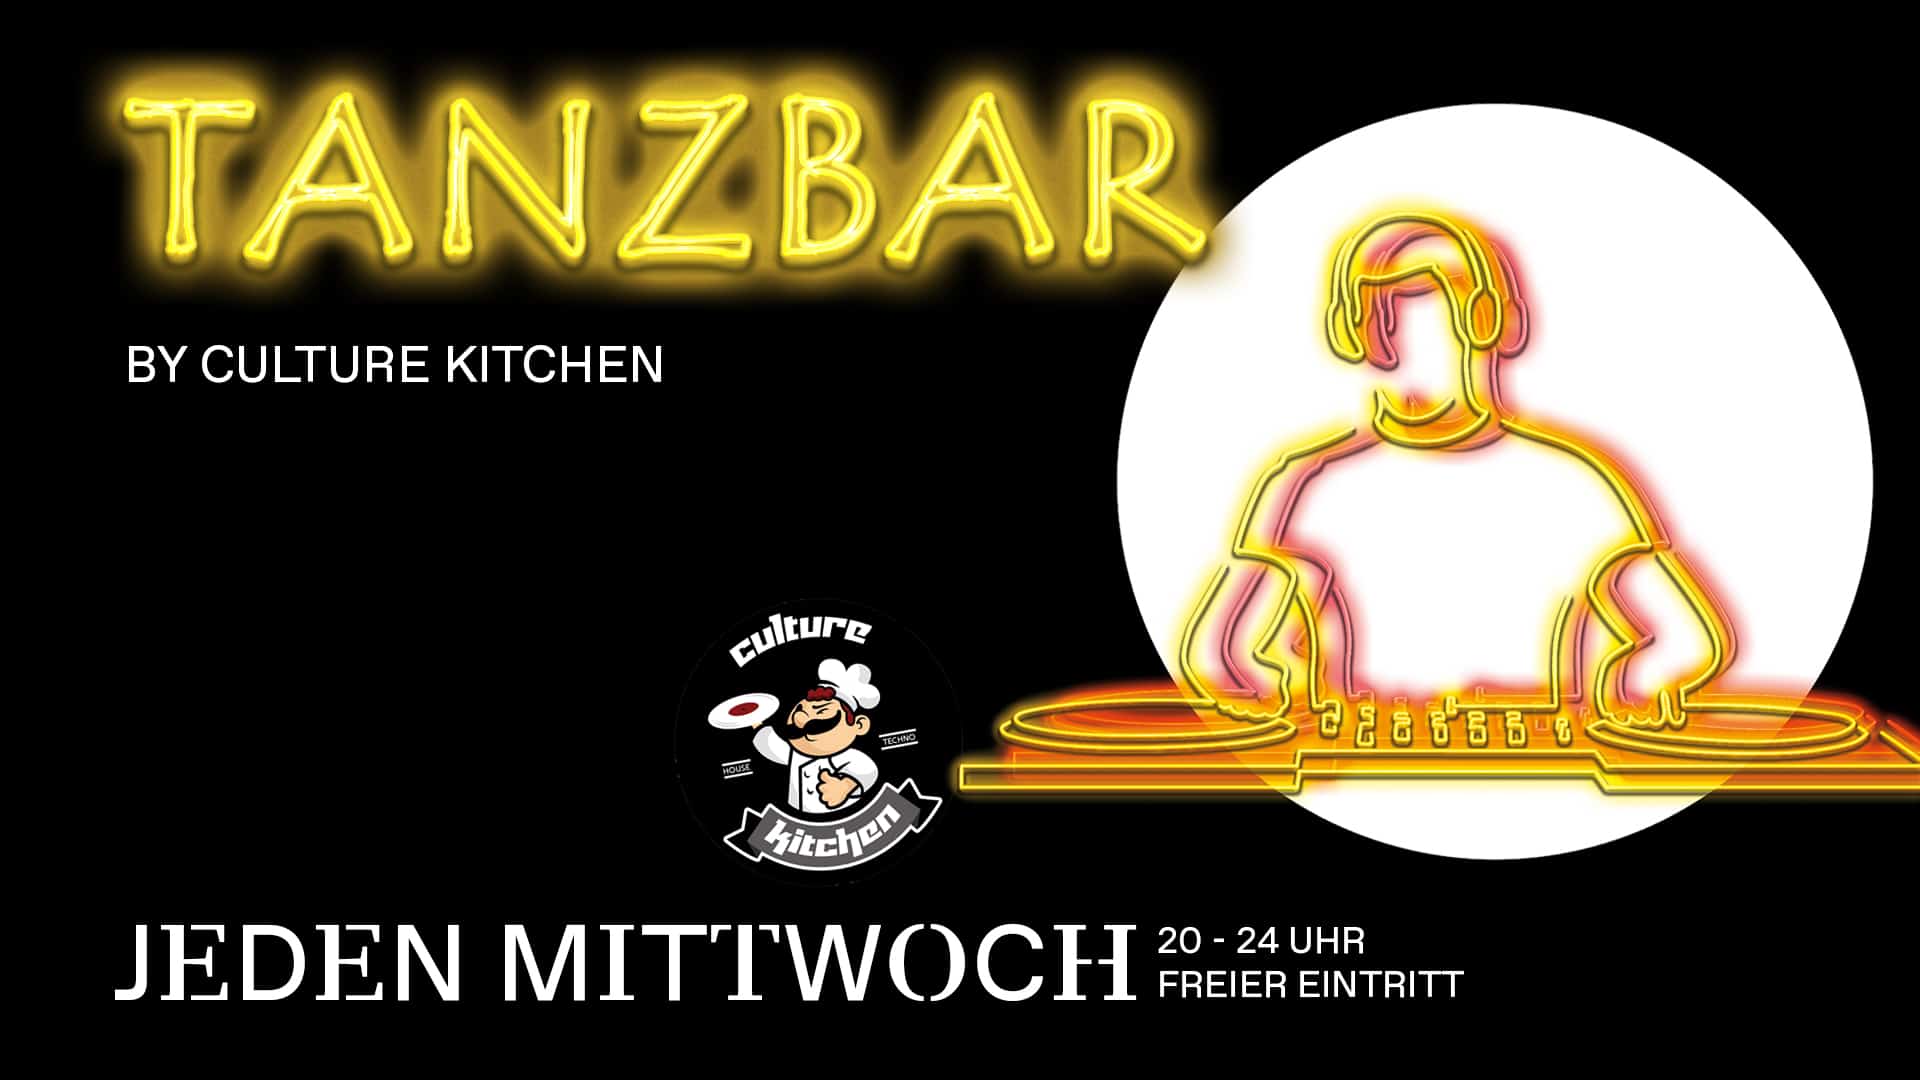 Tanzbar by culture kitchen